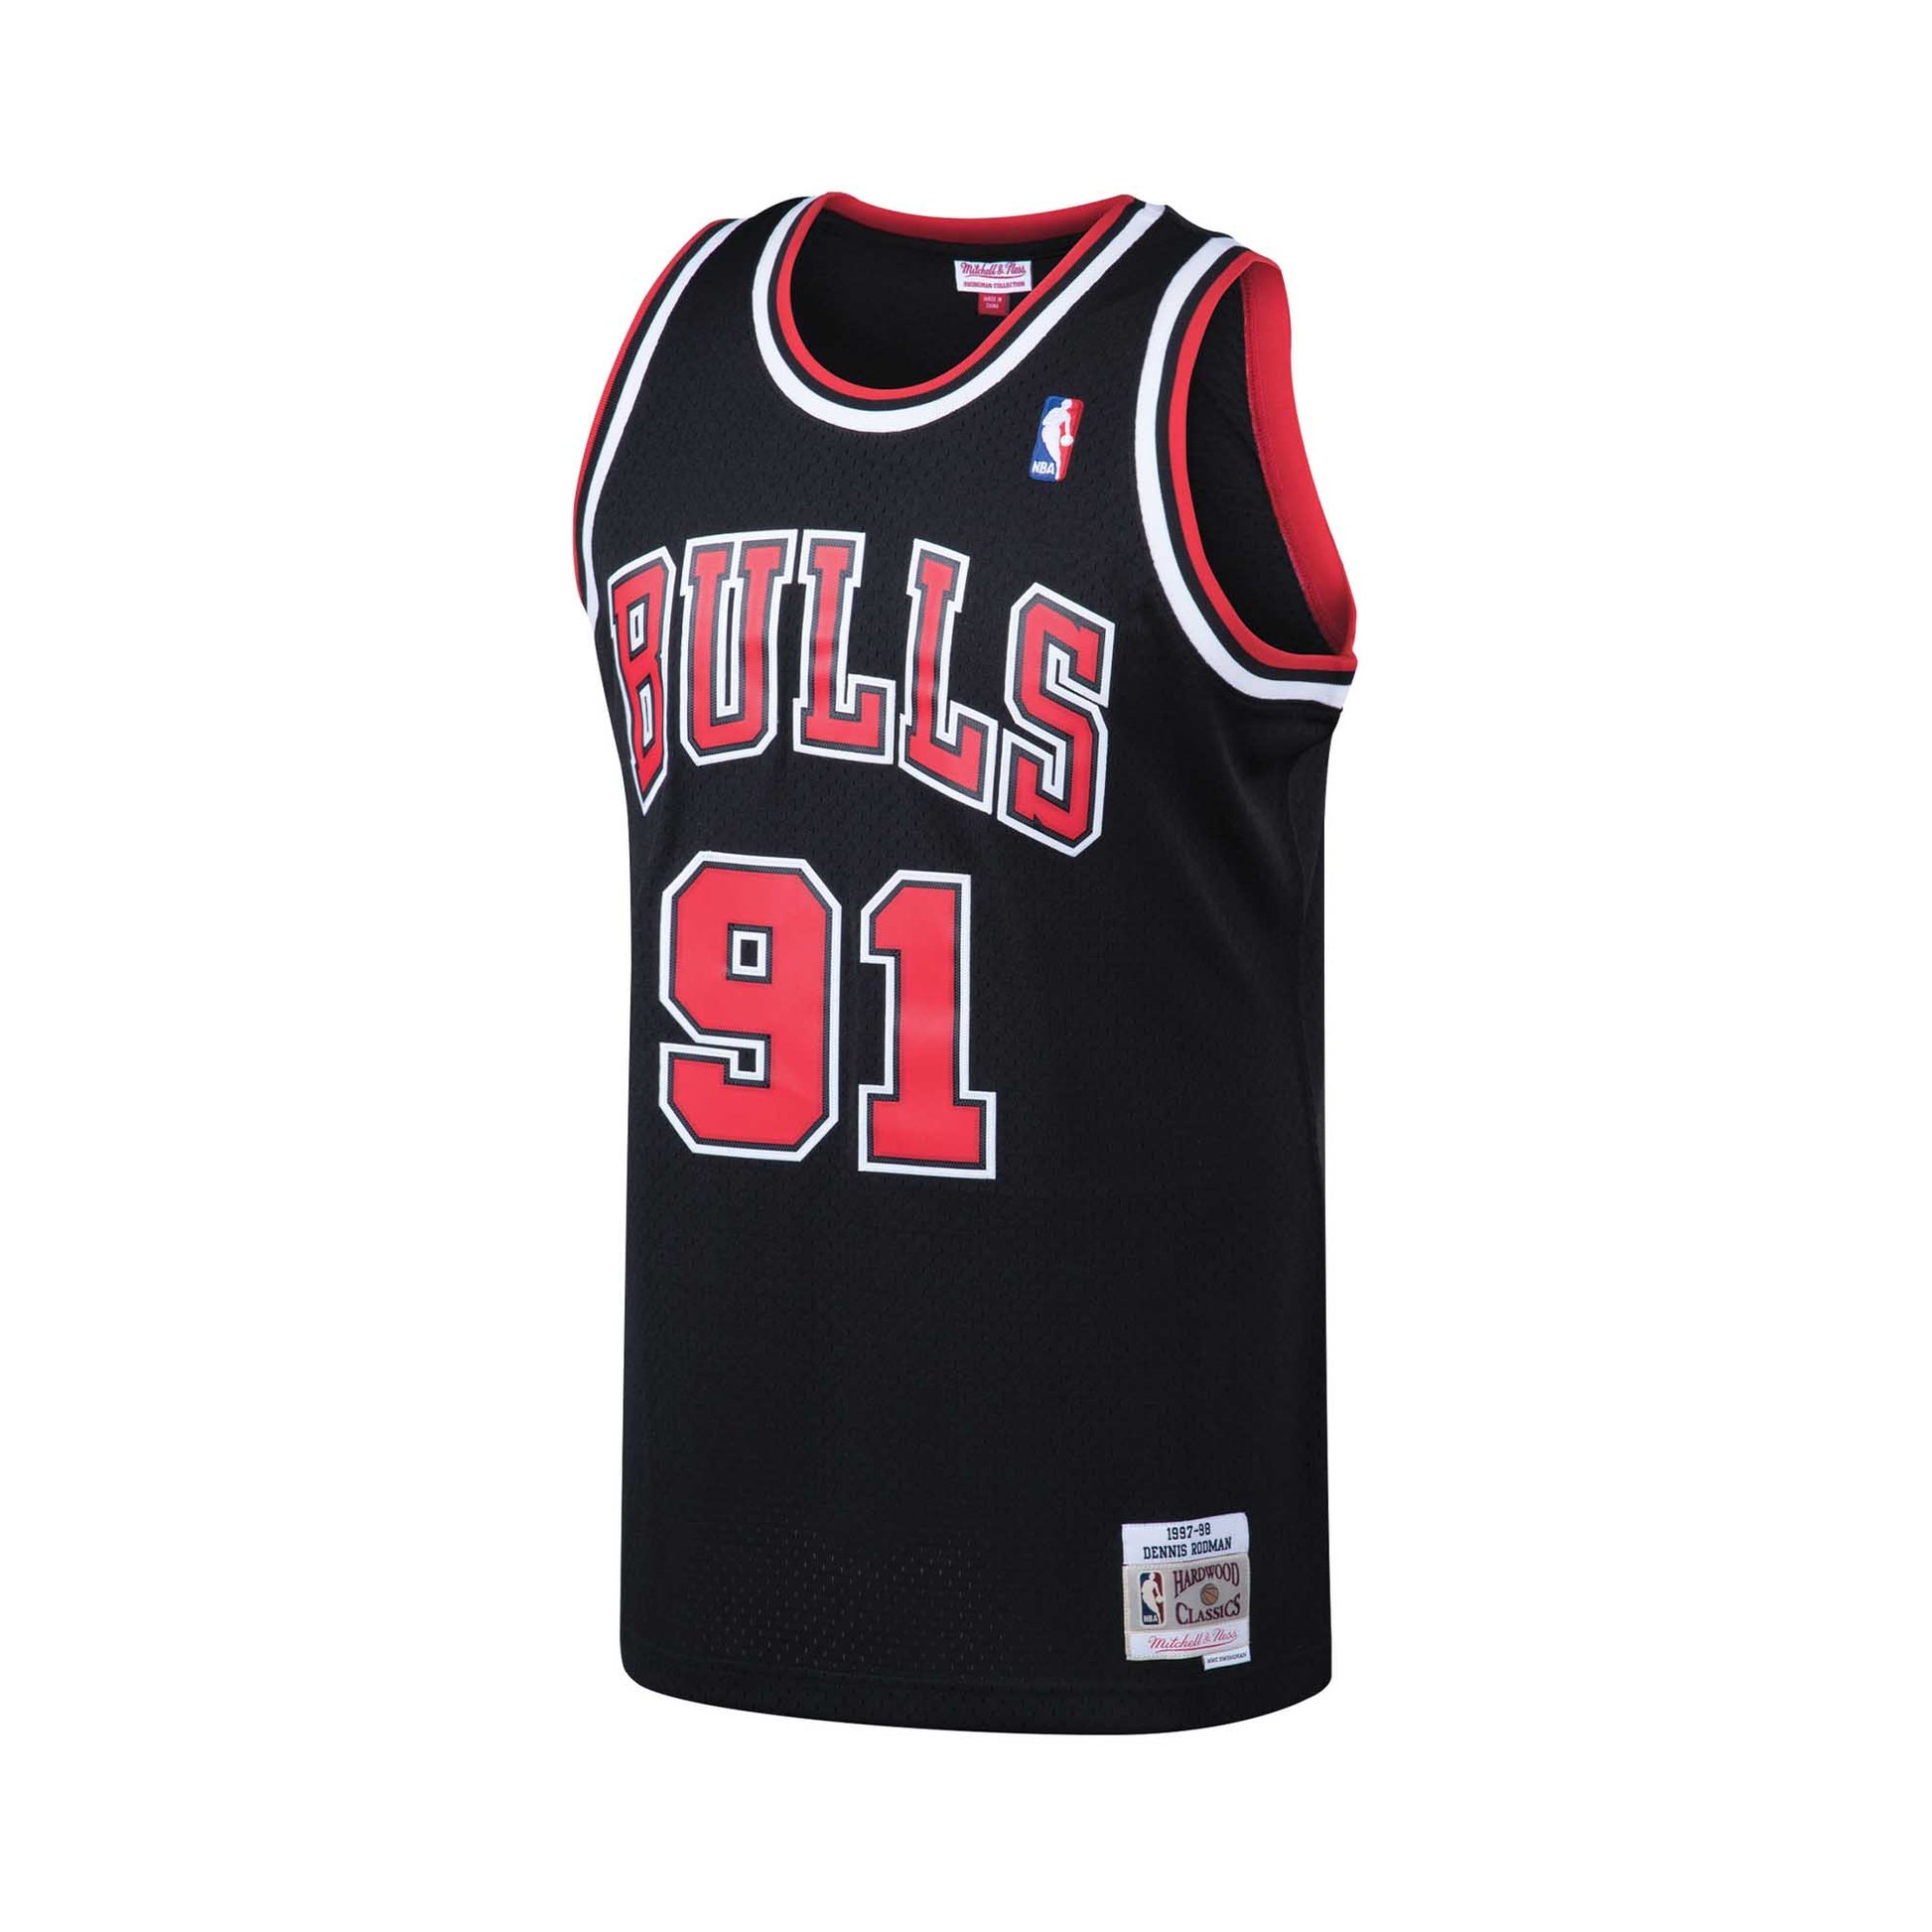 Dennis Rodman 1997-98 Chicago Bulls Alternate Hardwood Classic